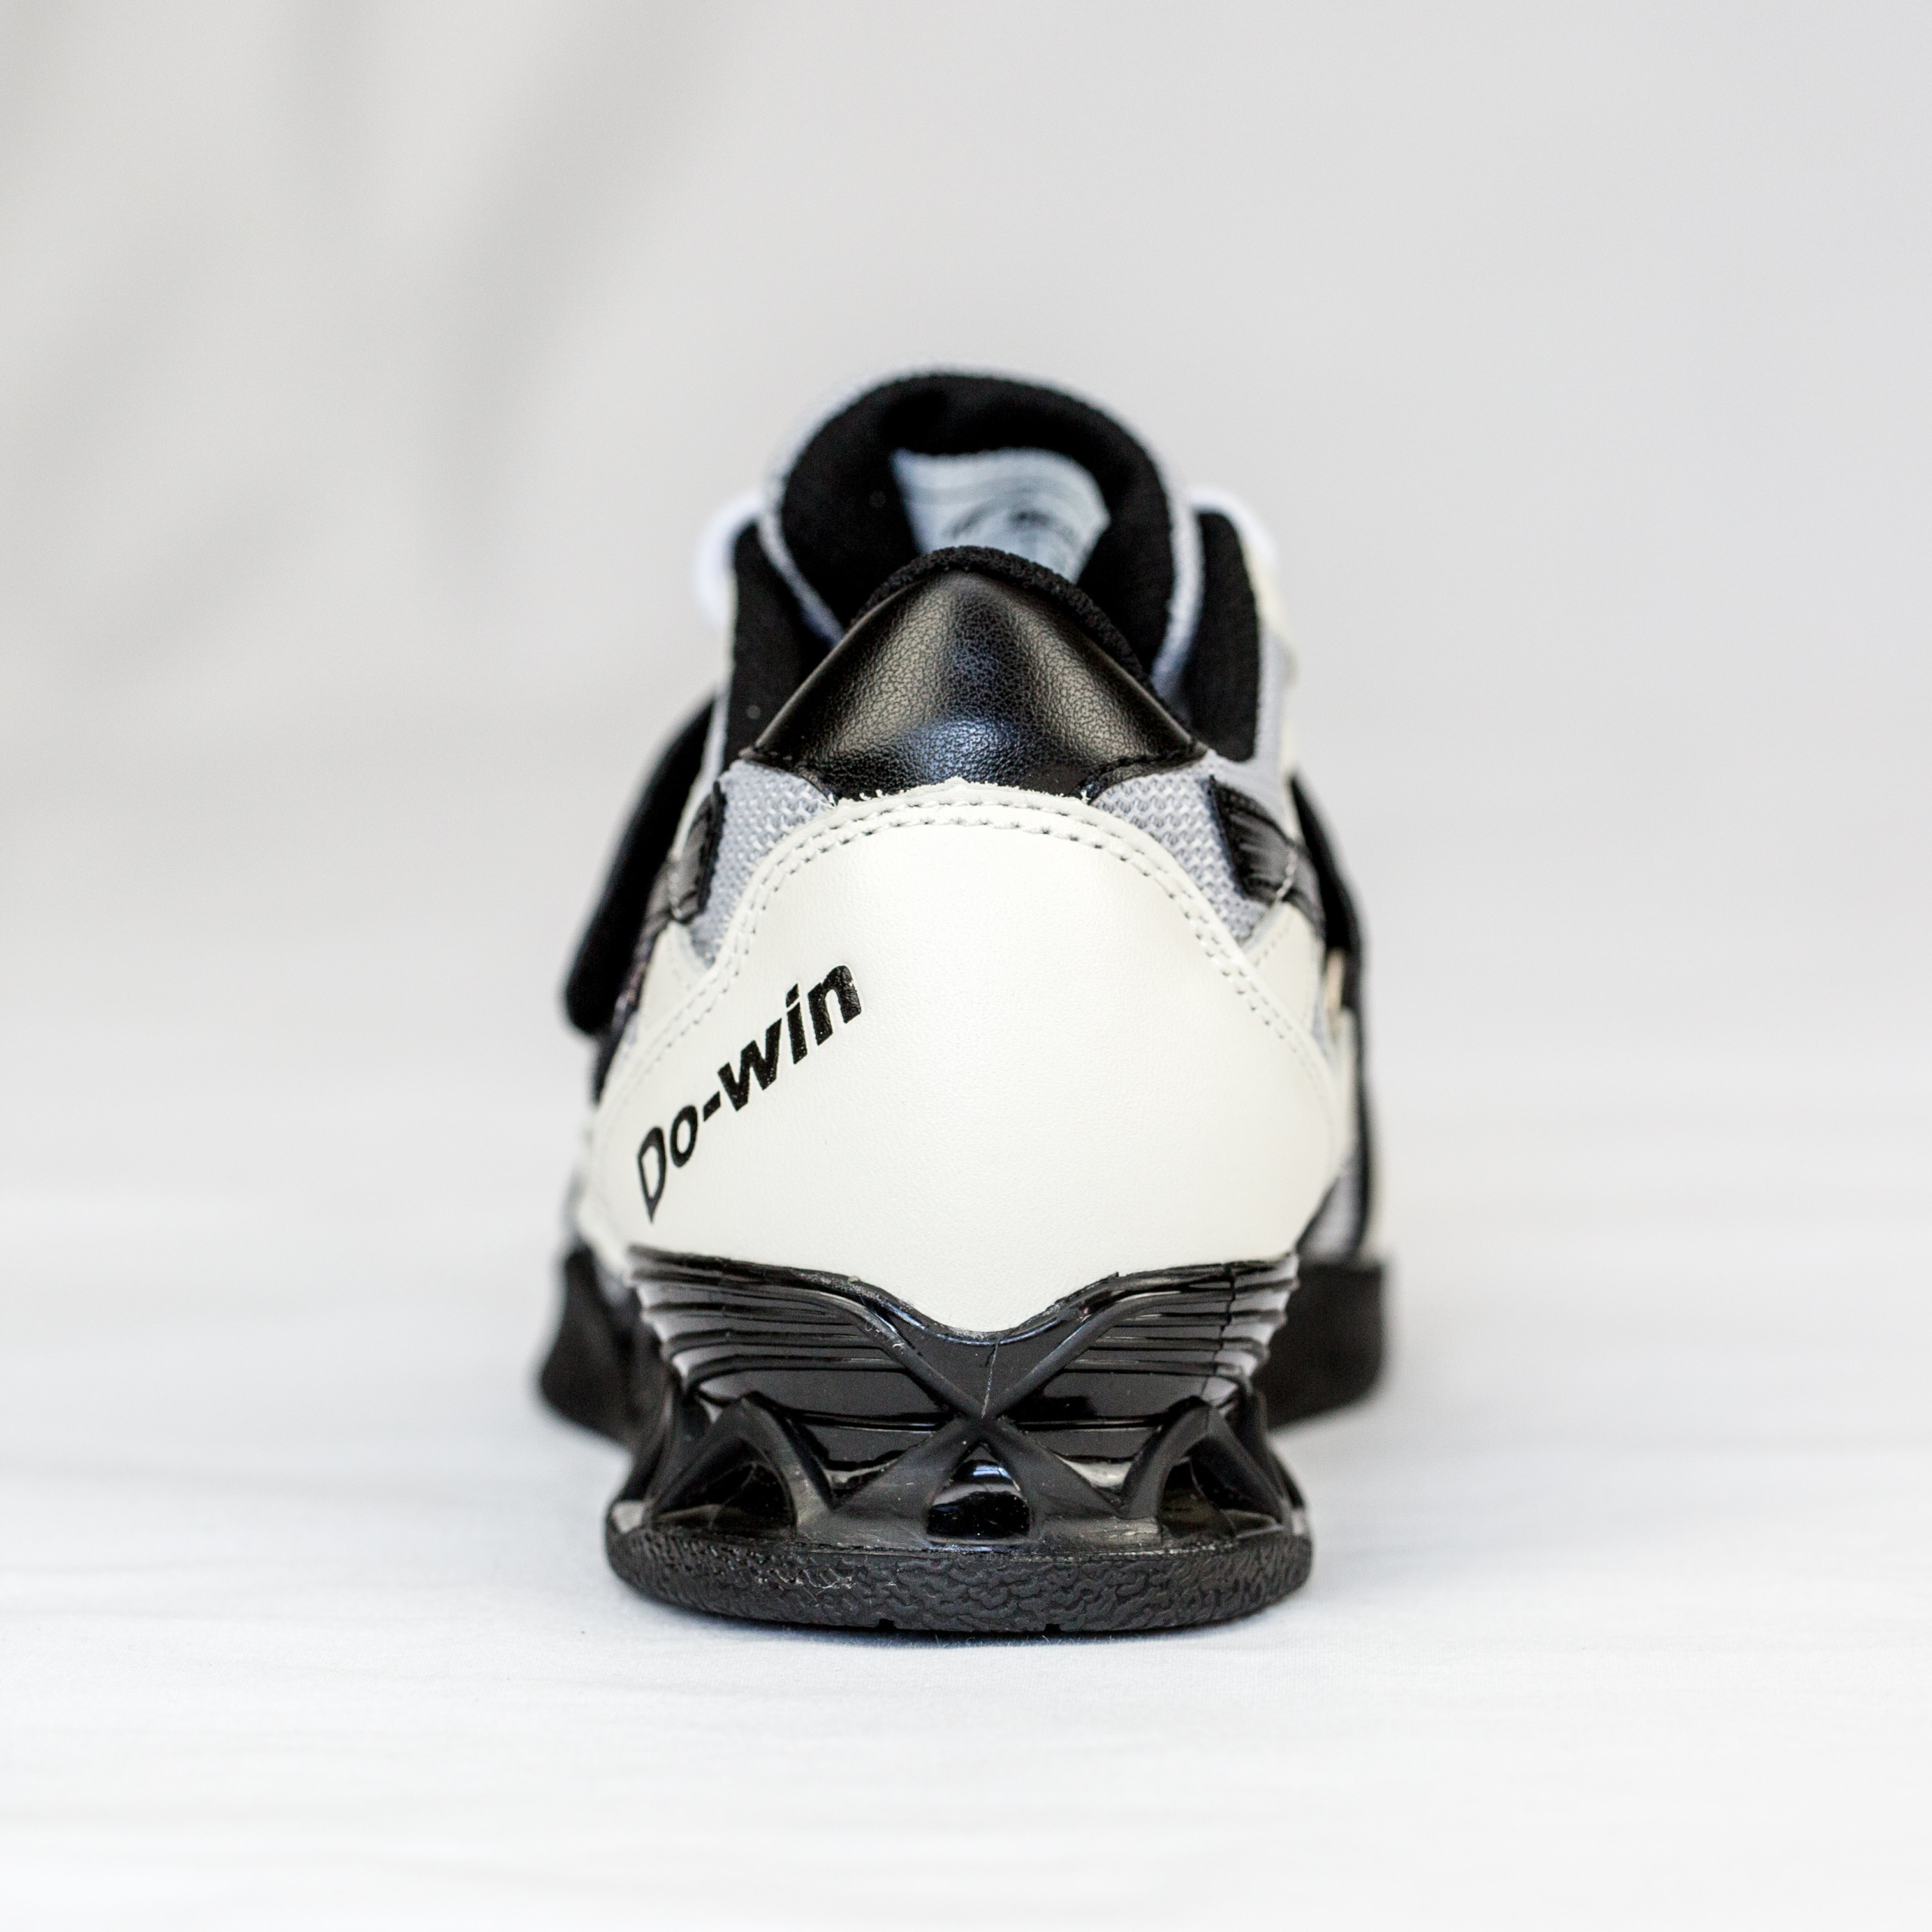 DO-WIN Advance (Gong-Lu 3) White/black weightlifting shoe